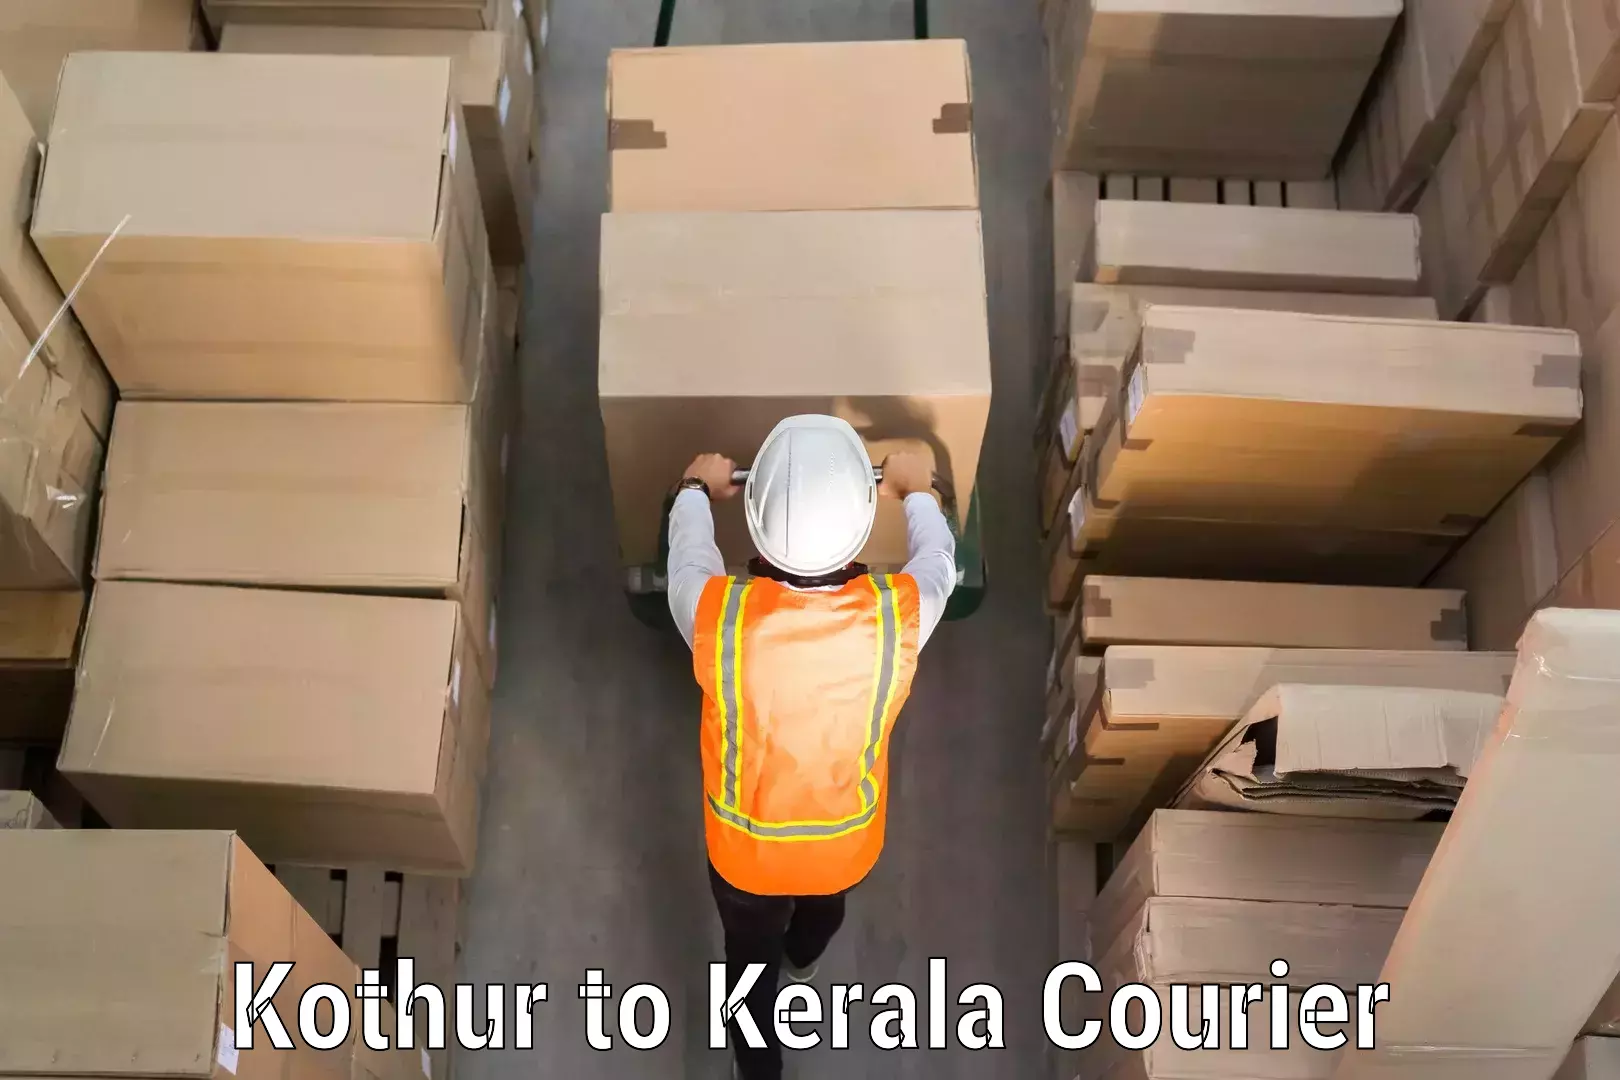 Same day luggage service Kothur to Kodungallur